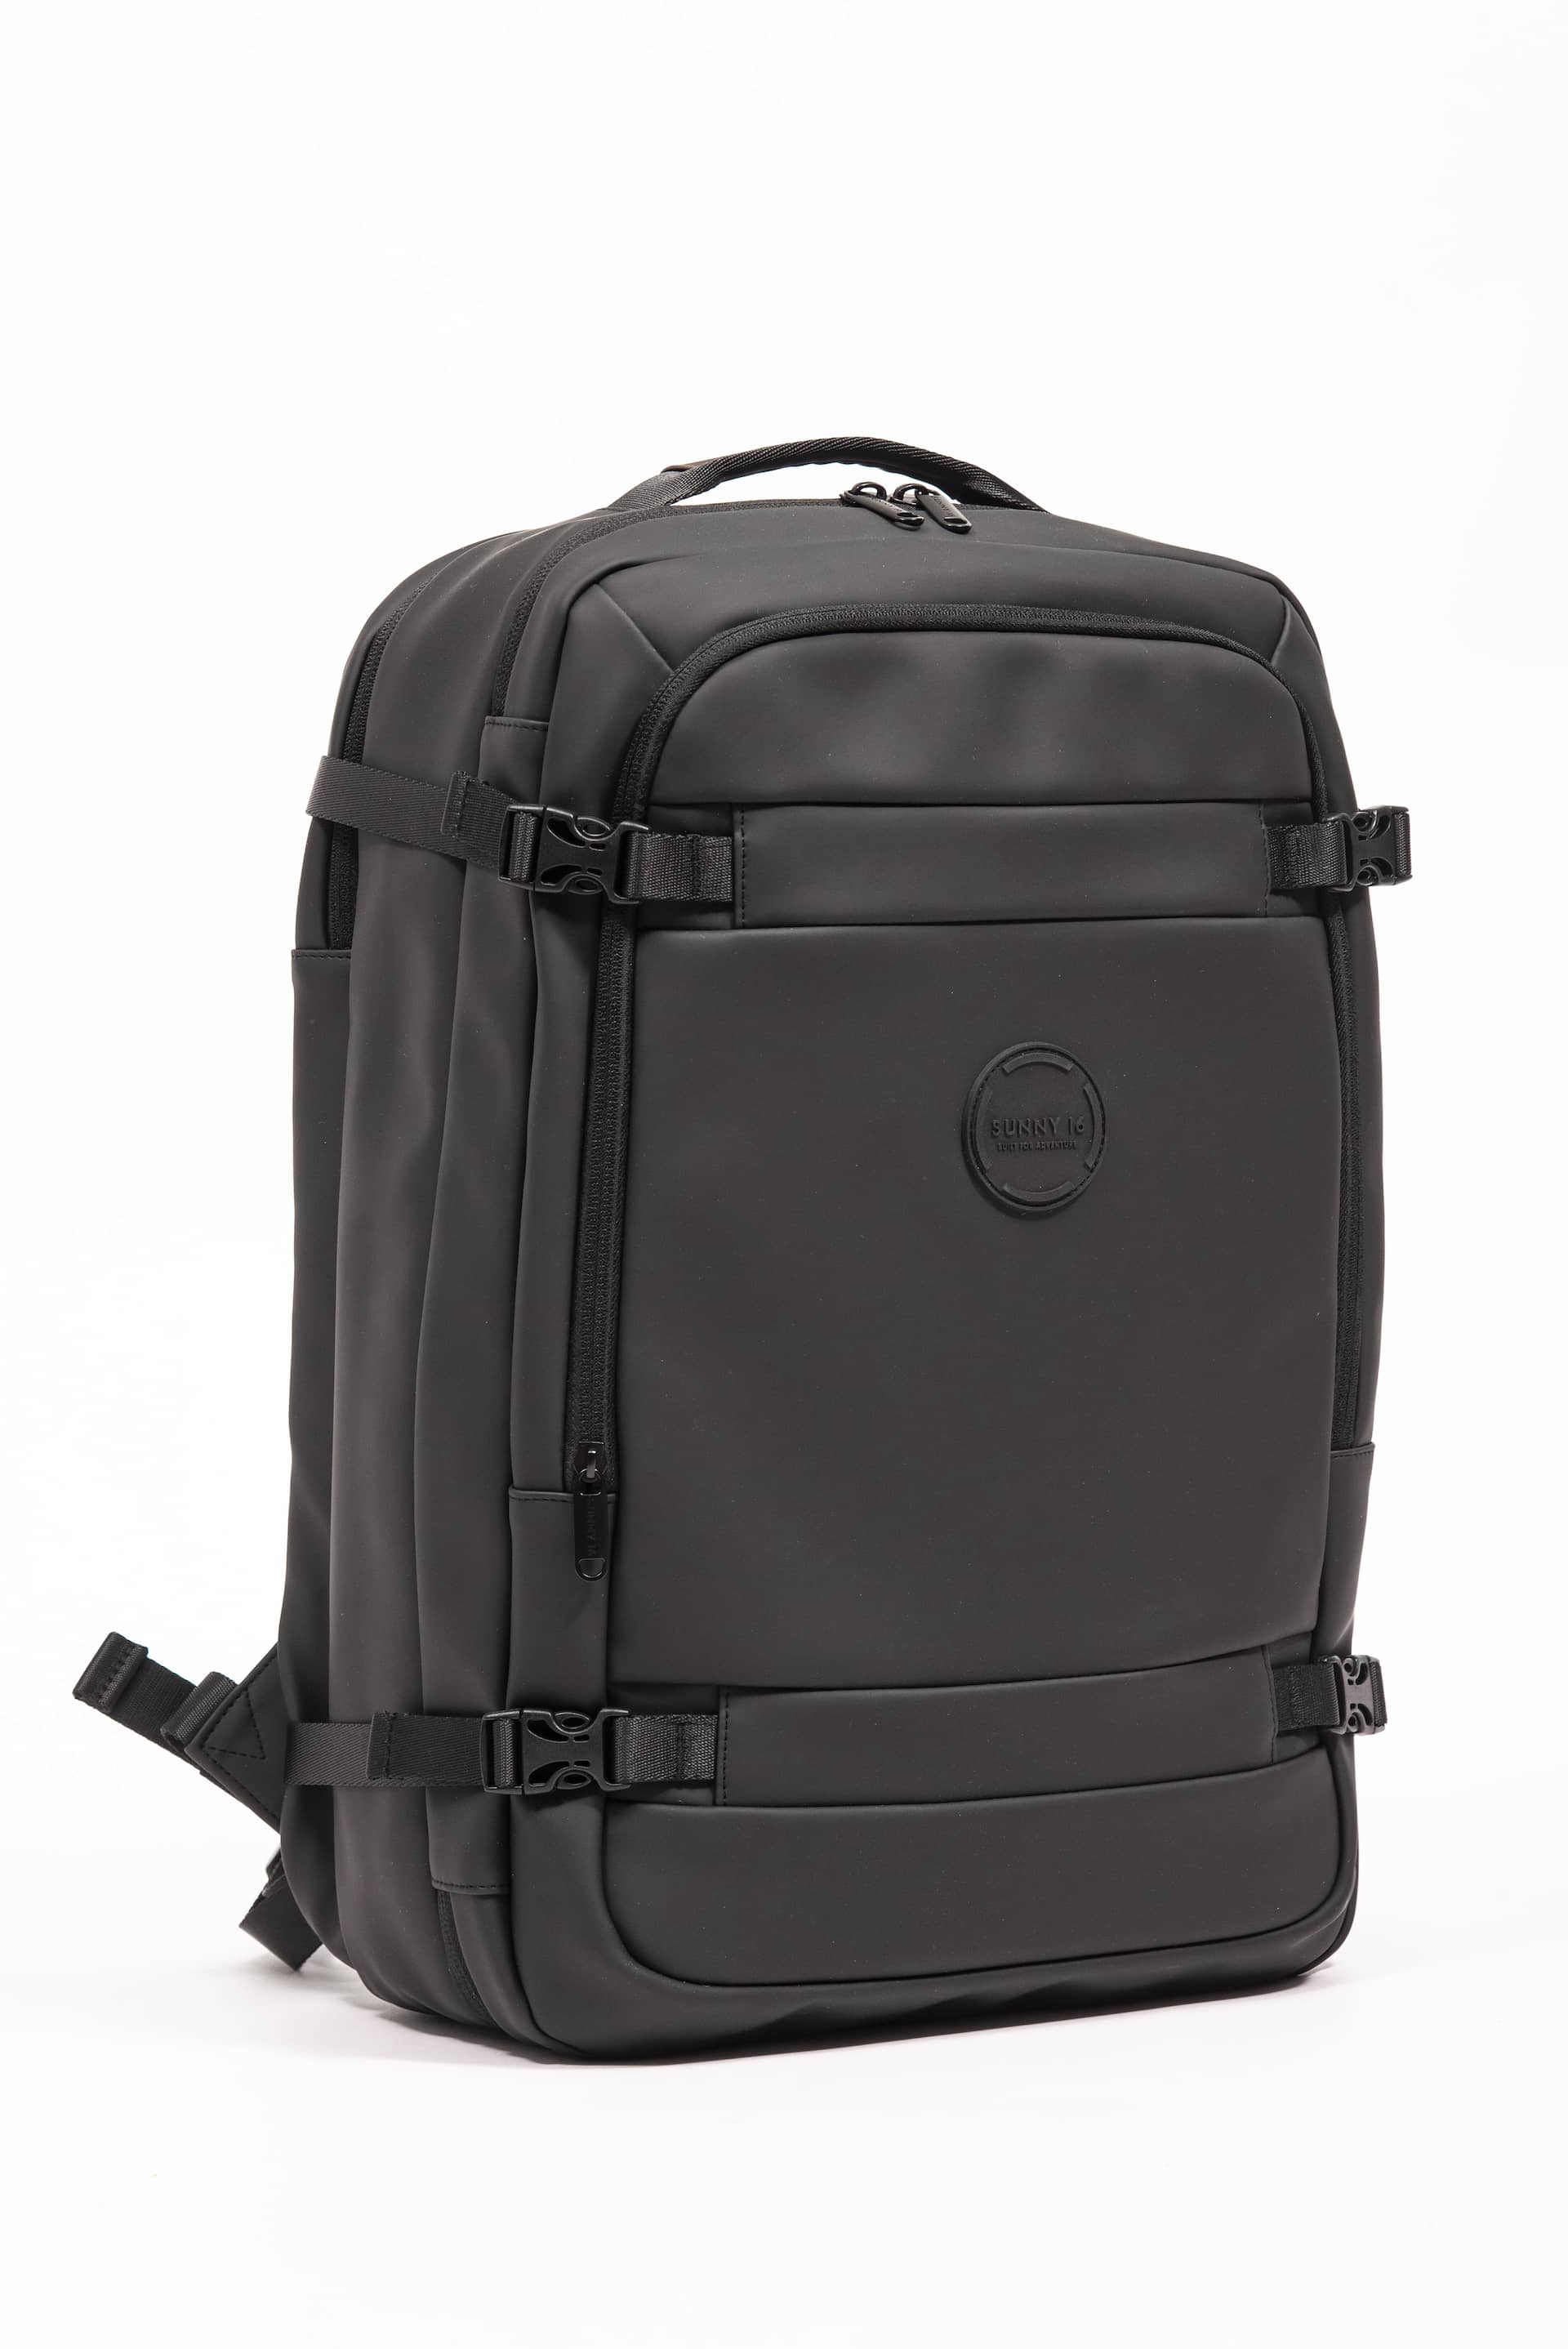 Best Carry-On Travel Backpack for Women - Travel Laptop Backpack - Sunny 16